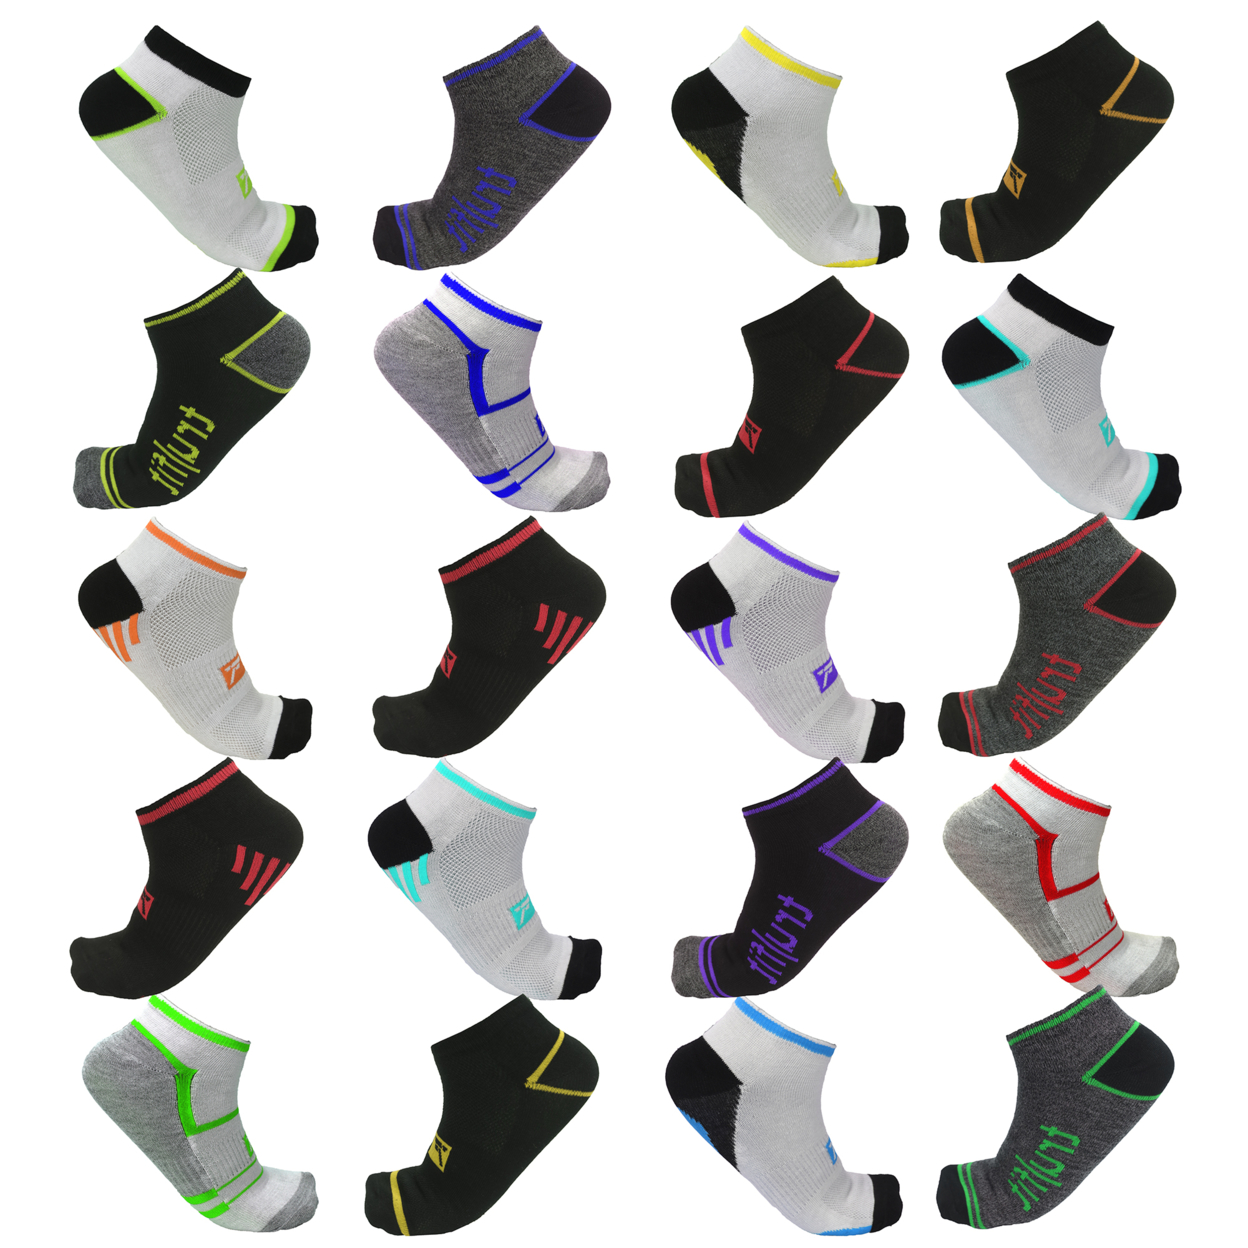 20 Pair: Unisex Premium Quality Printed Socks - Men's Trufit Ankle Socks